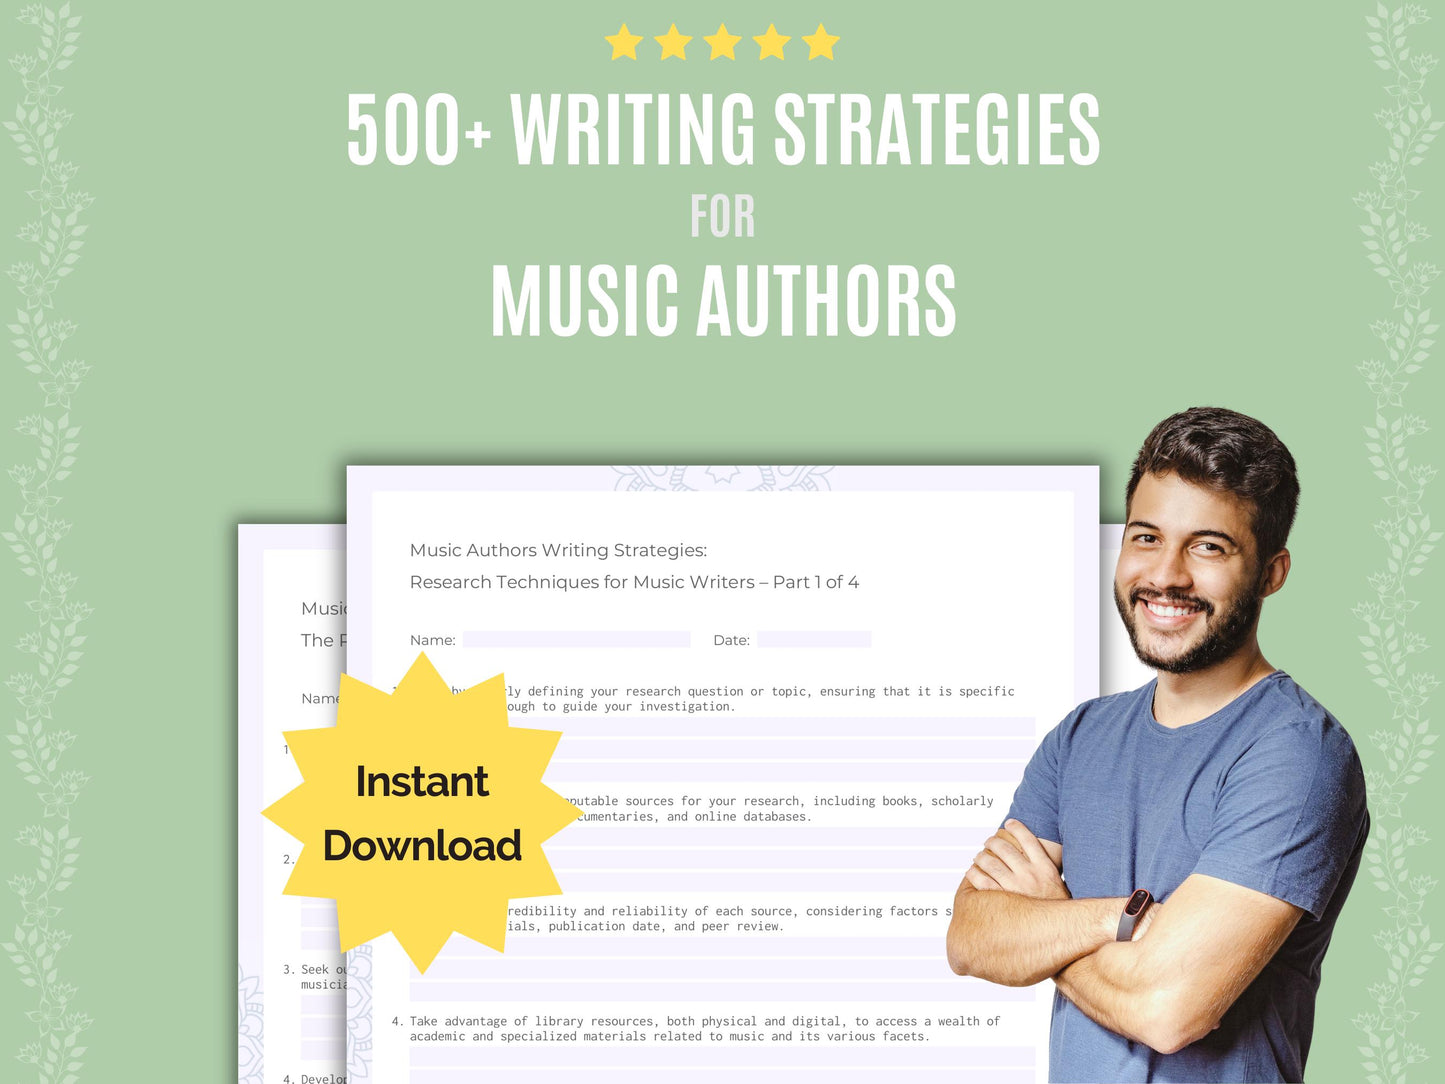 Music Authors Writing